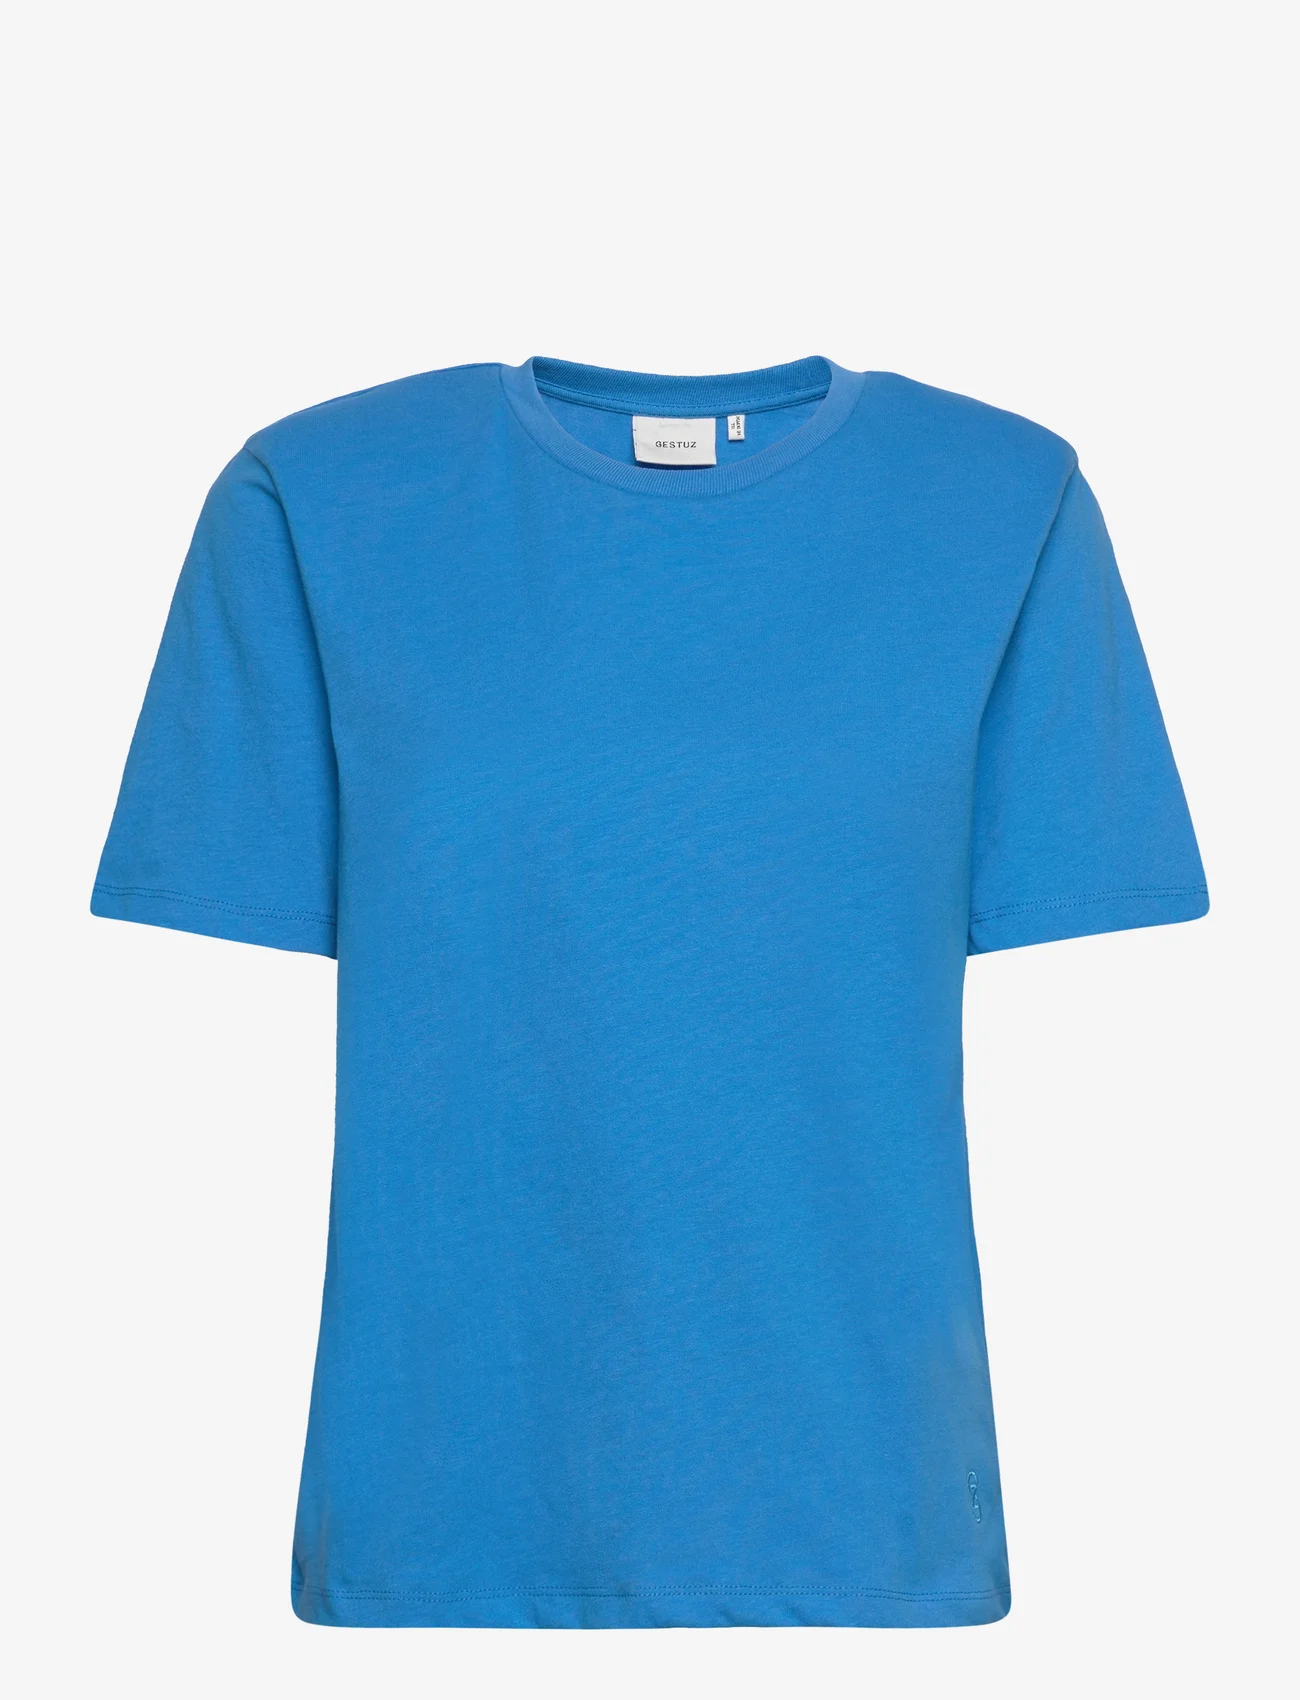 Gestuz - JoryGZ tee - t-shirts & tops - malibu blue - 0